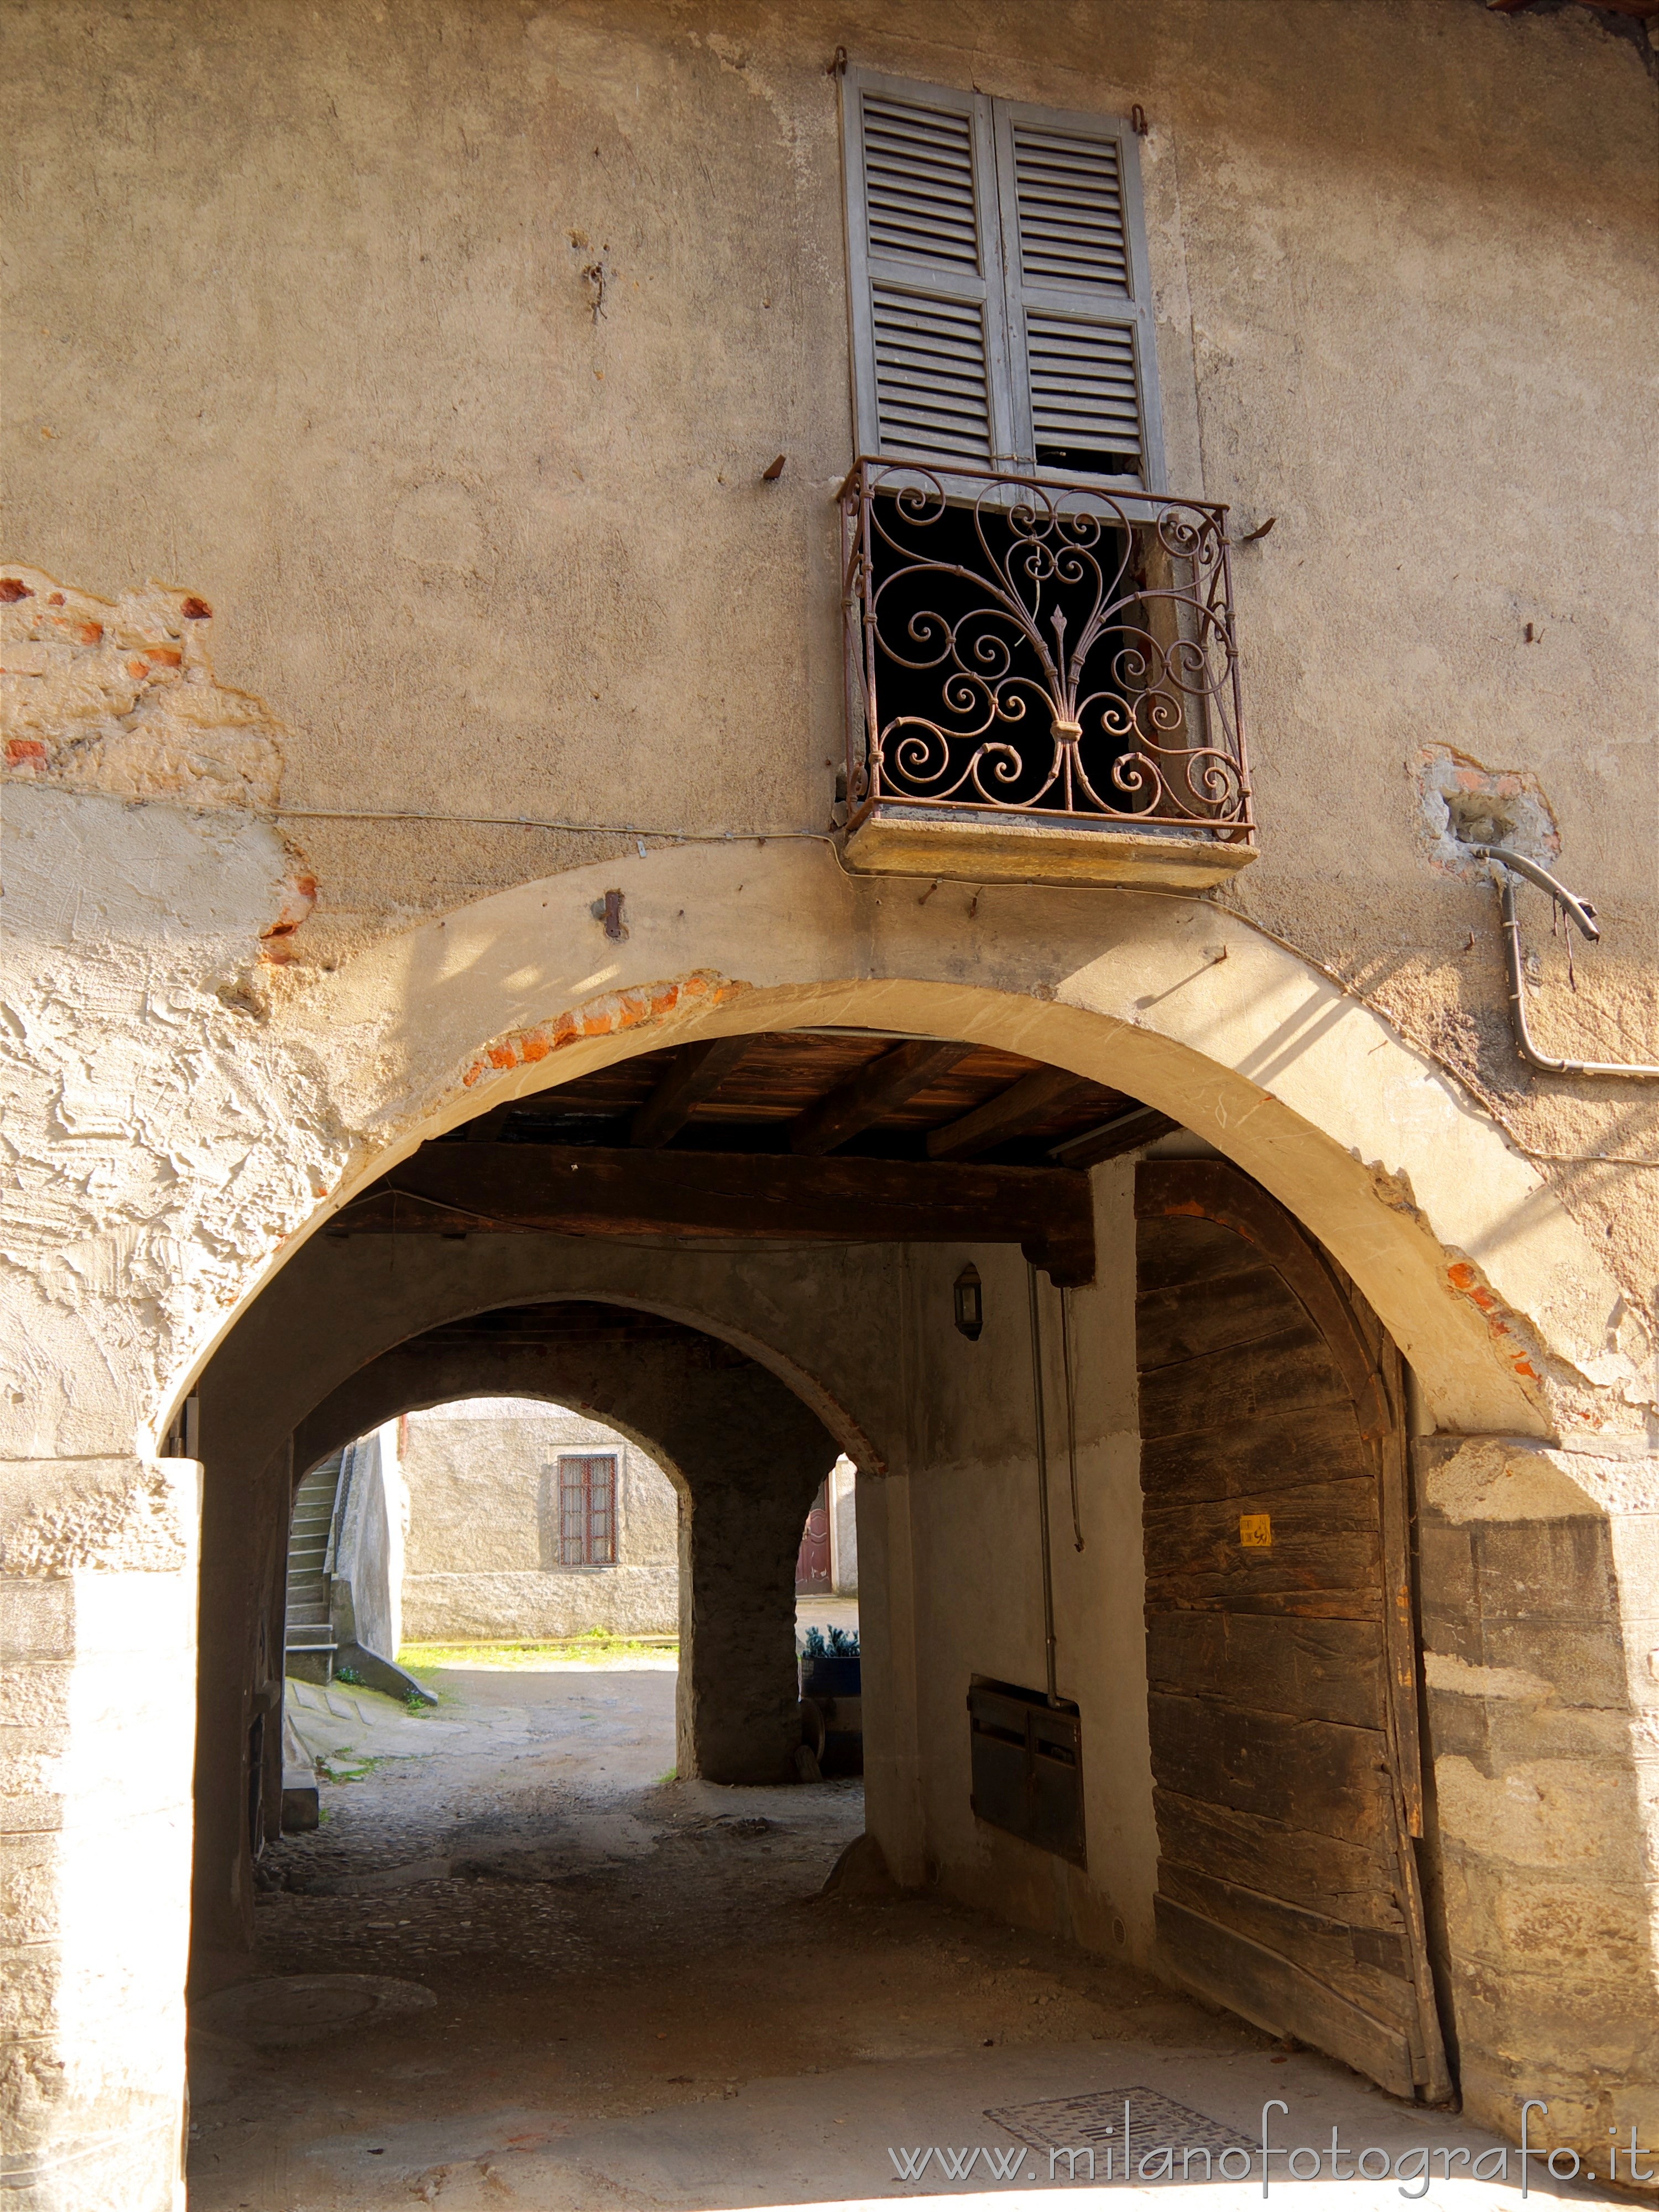 Castiglione Olona (Varese, Italy): Vault and balcony - Castiglione Olona (Varese, Italy)